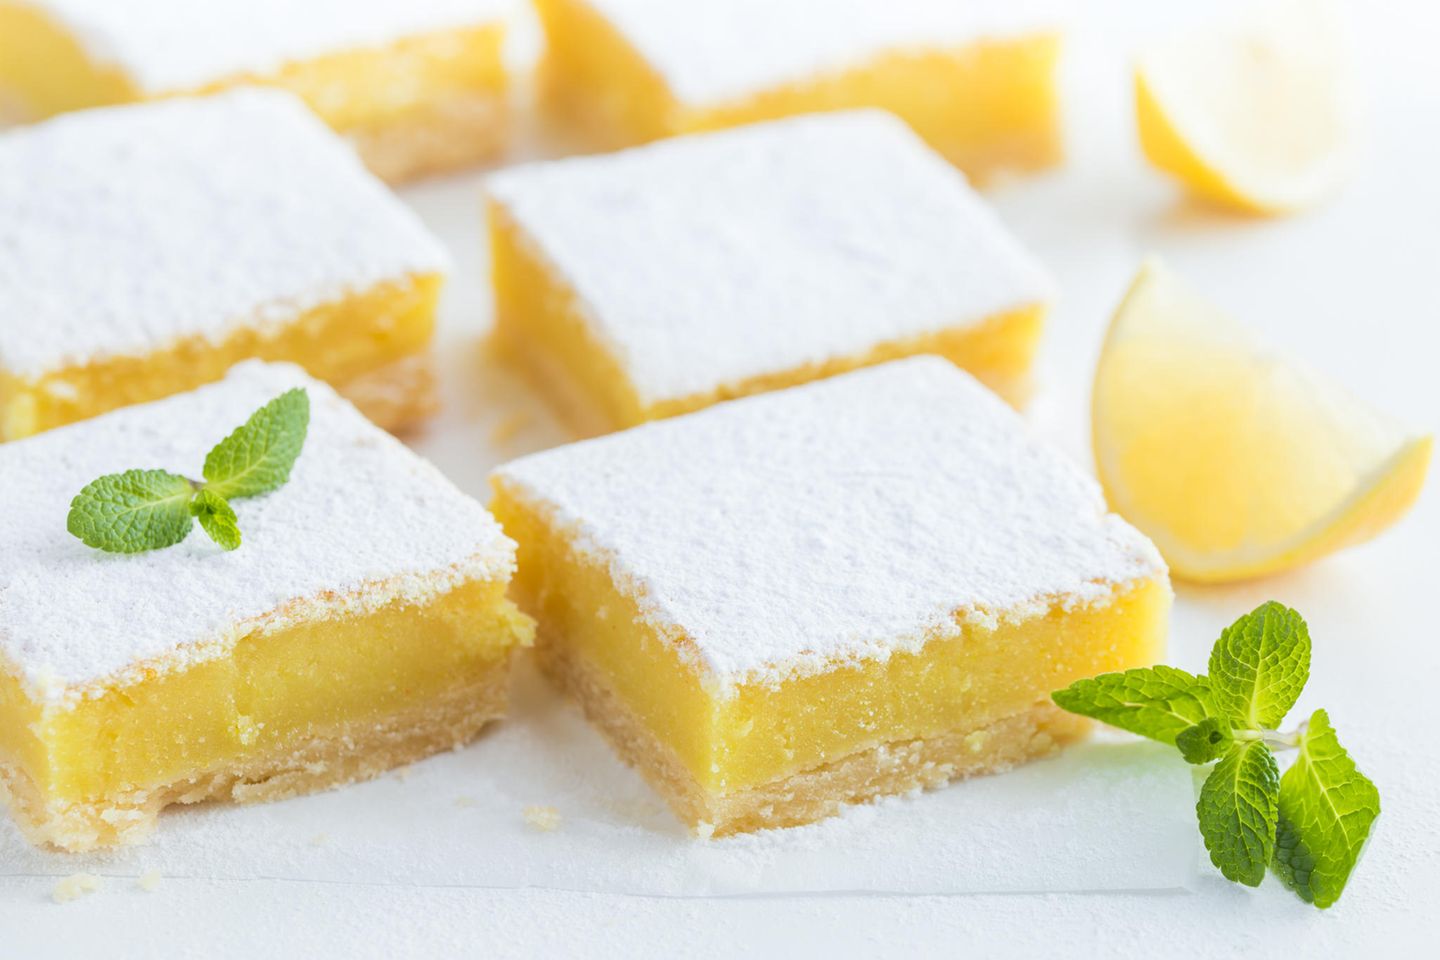 Divine joy: lemon cake is prepared on a white tablecloth